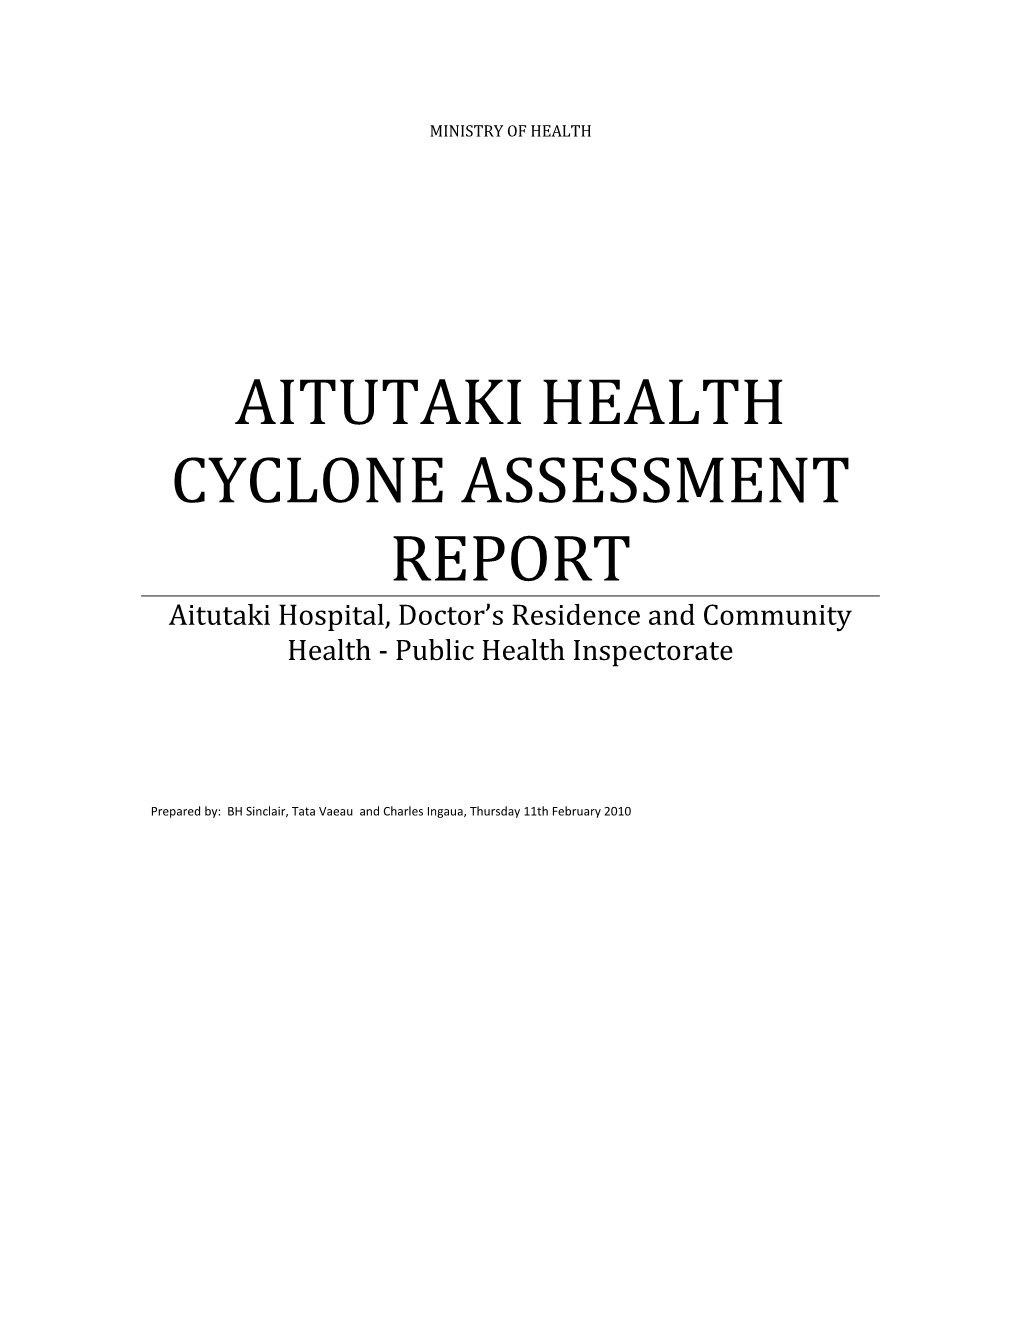 Aitutaki Health Cyclone Assessment Report